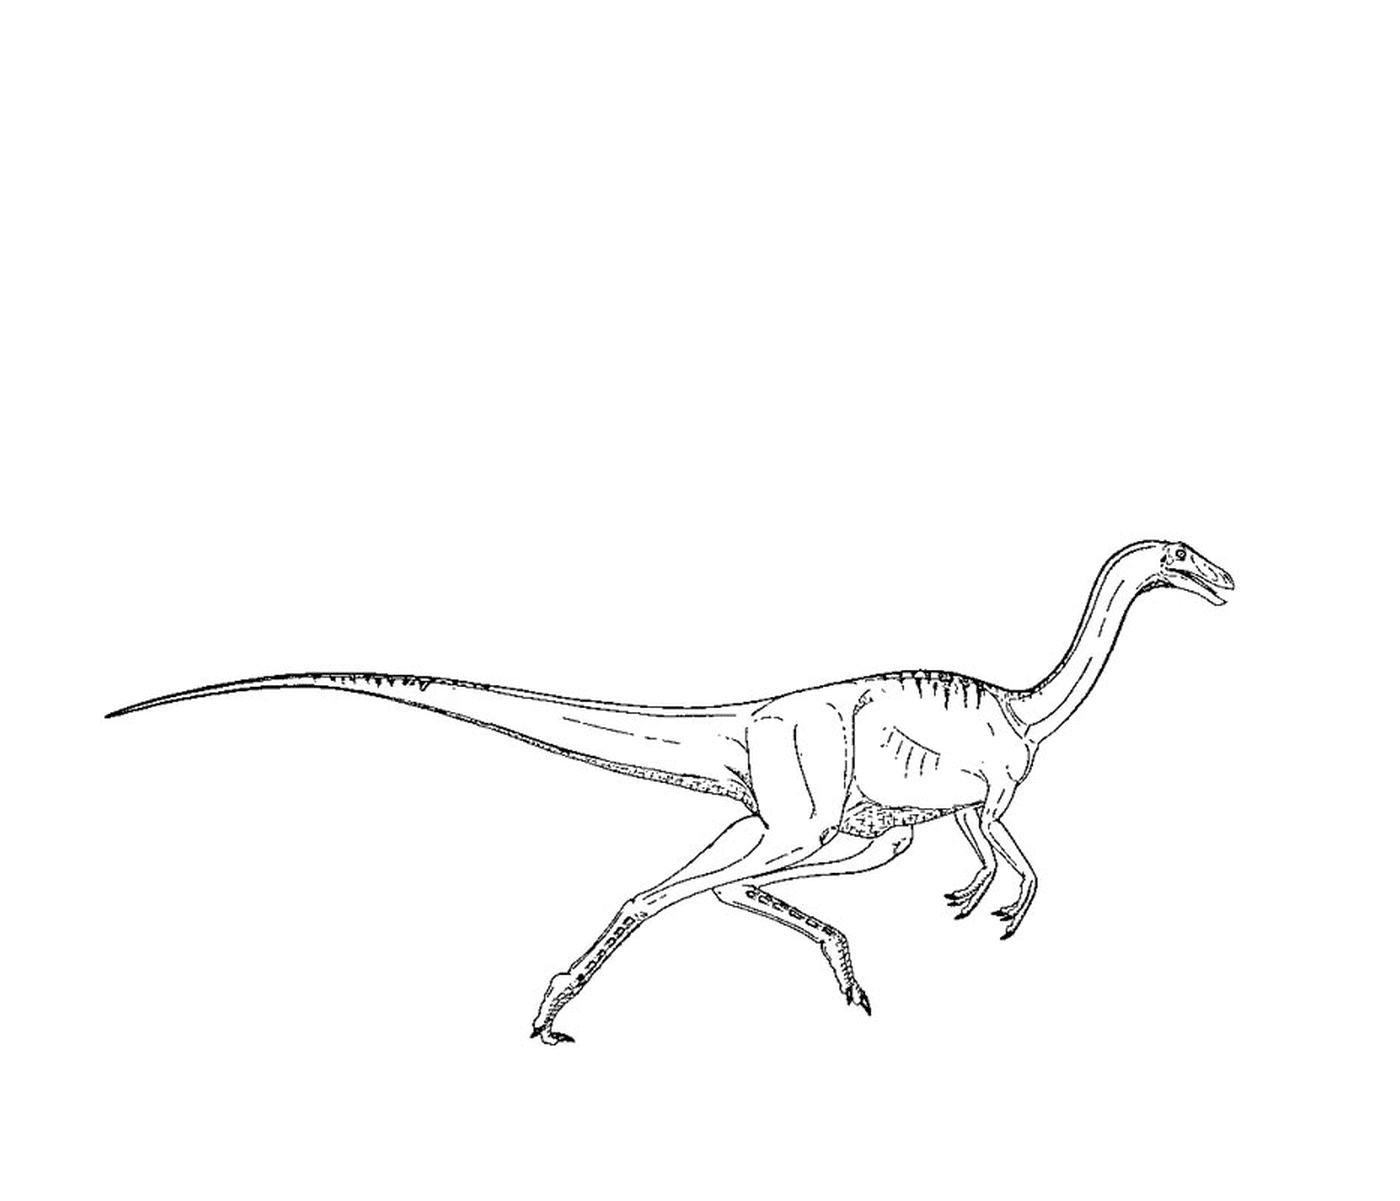  Jurassic Park Dinosaur, amazing long neck 